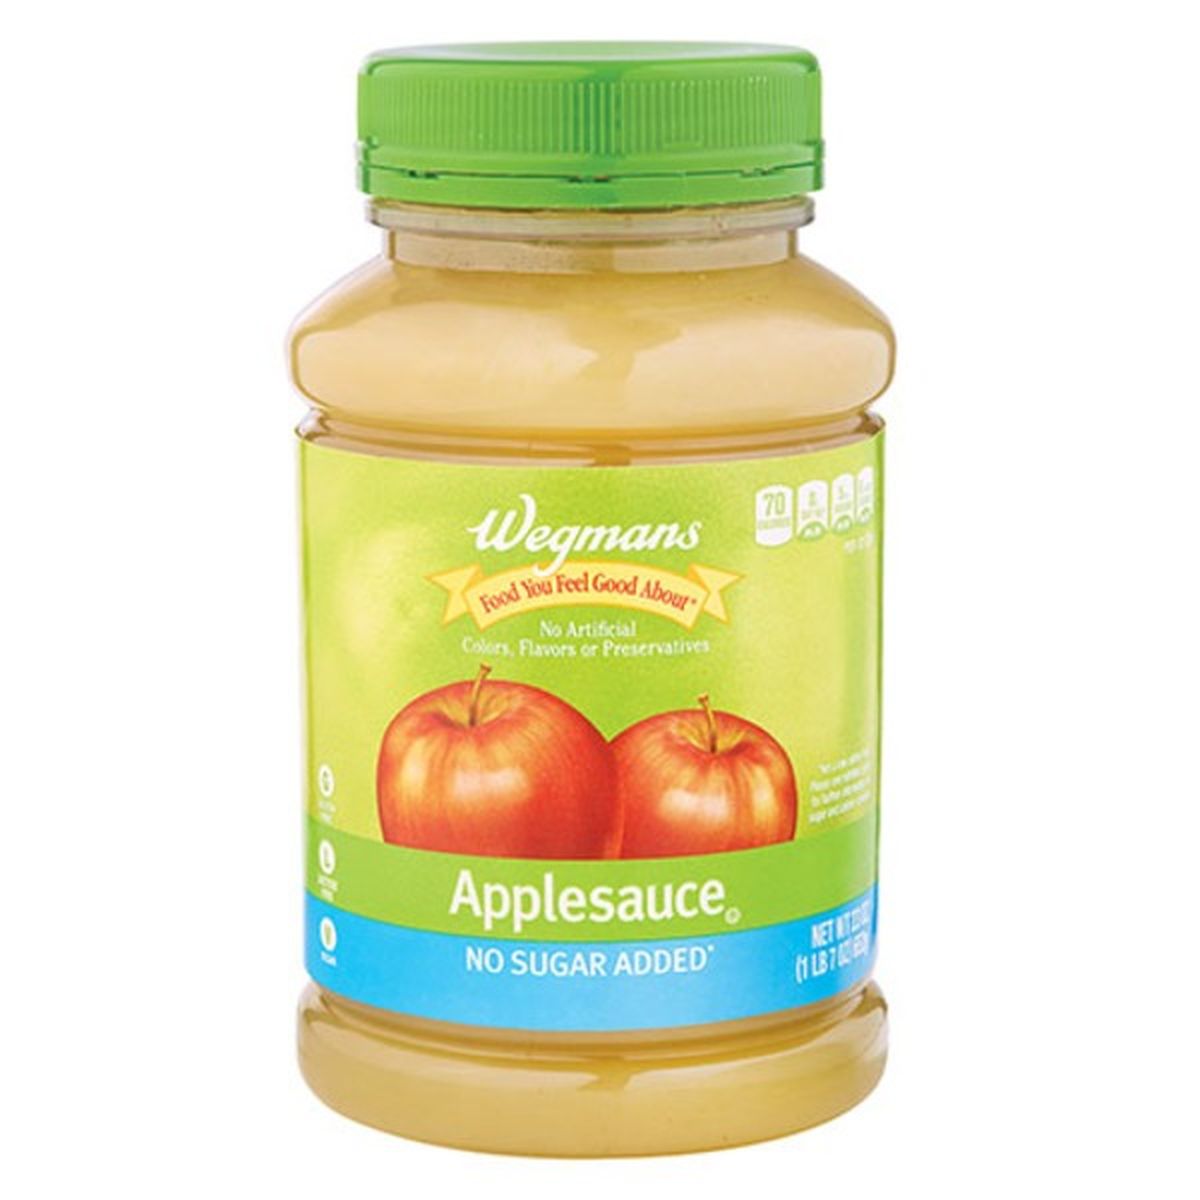 Calories in Wegmans Natural Applesauce, No Sugar Added